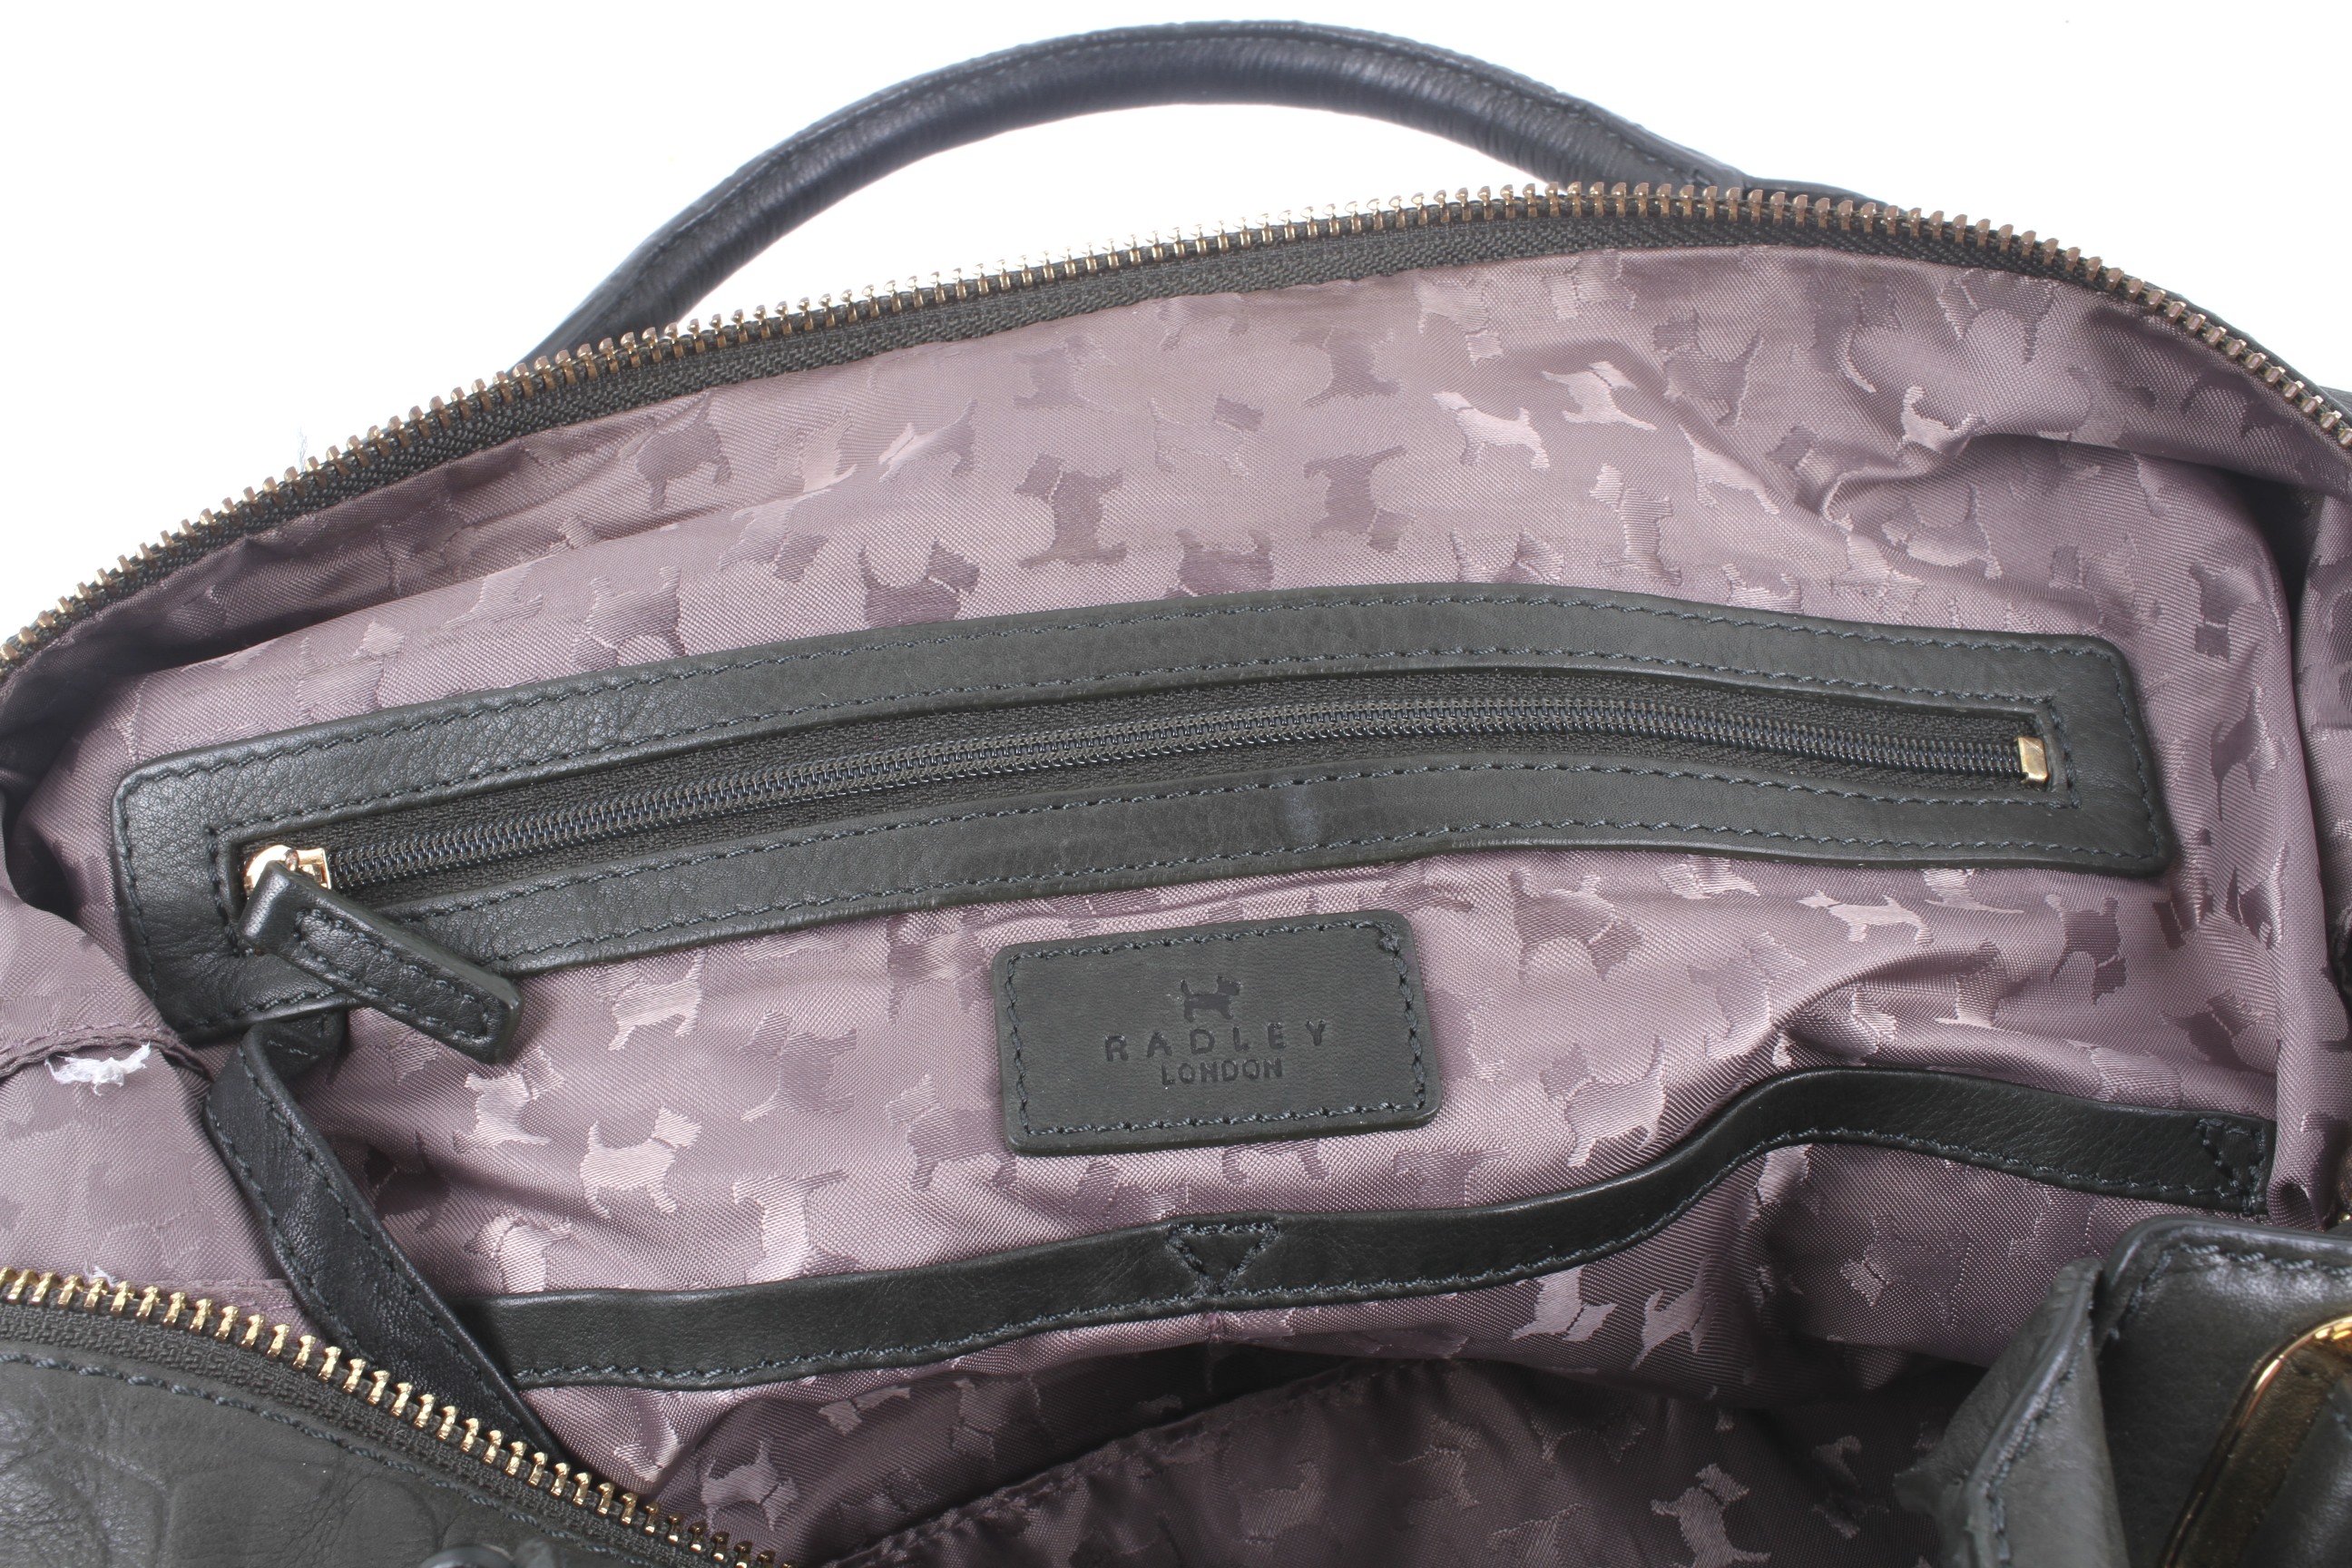 A Radley green leather handbag. - Image 3 of 3